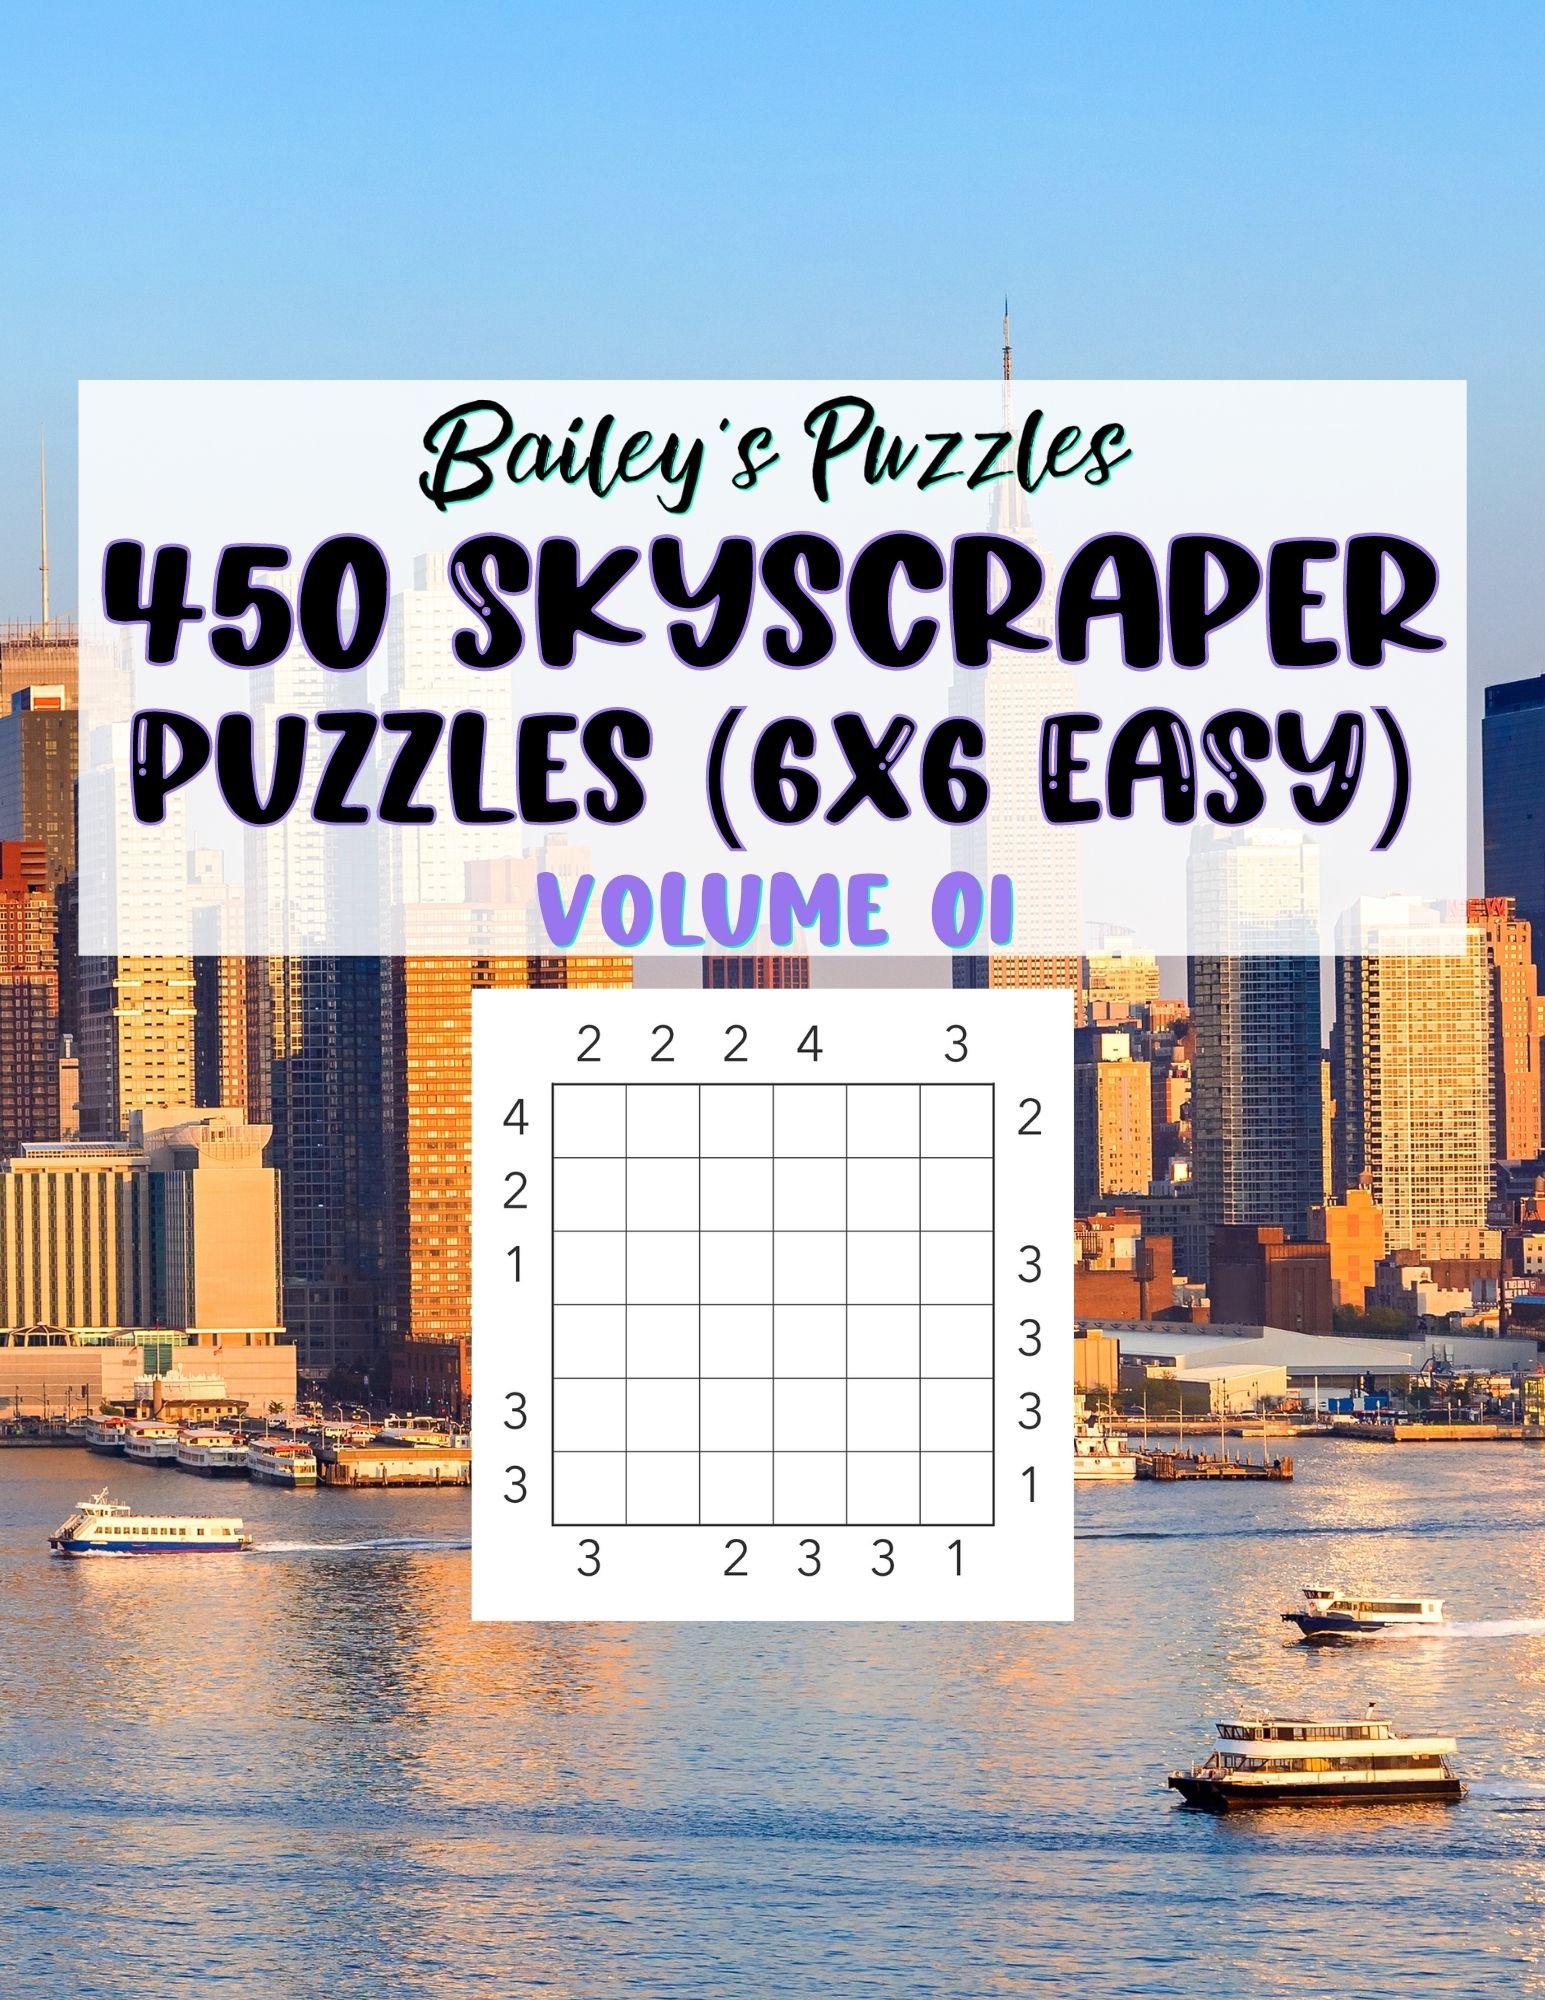 Front Cover - 450 Skyscraper Puzzles (6x6, easy)